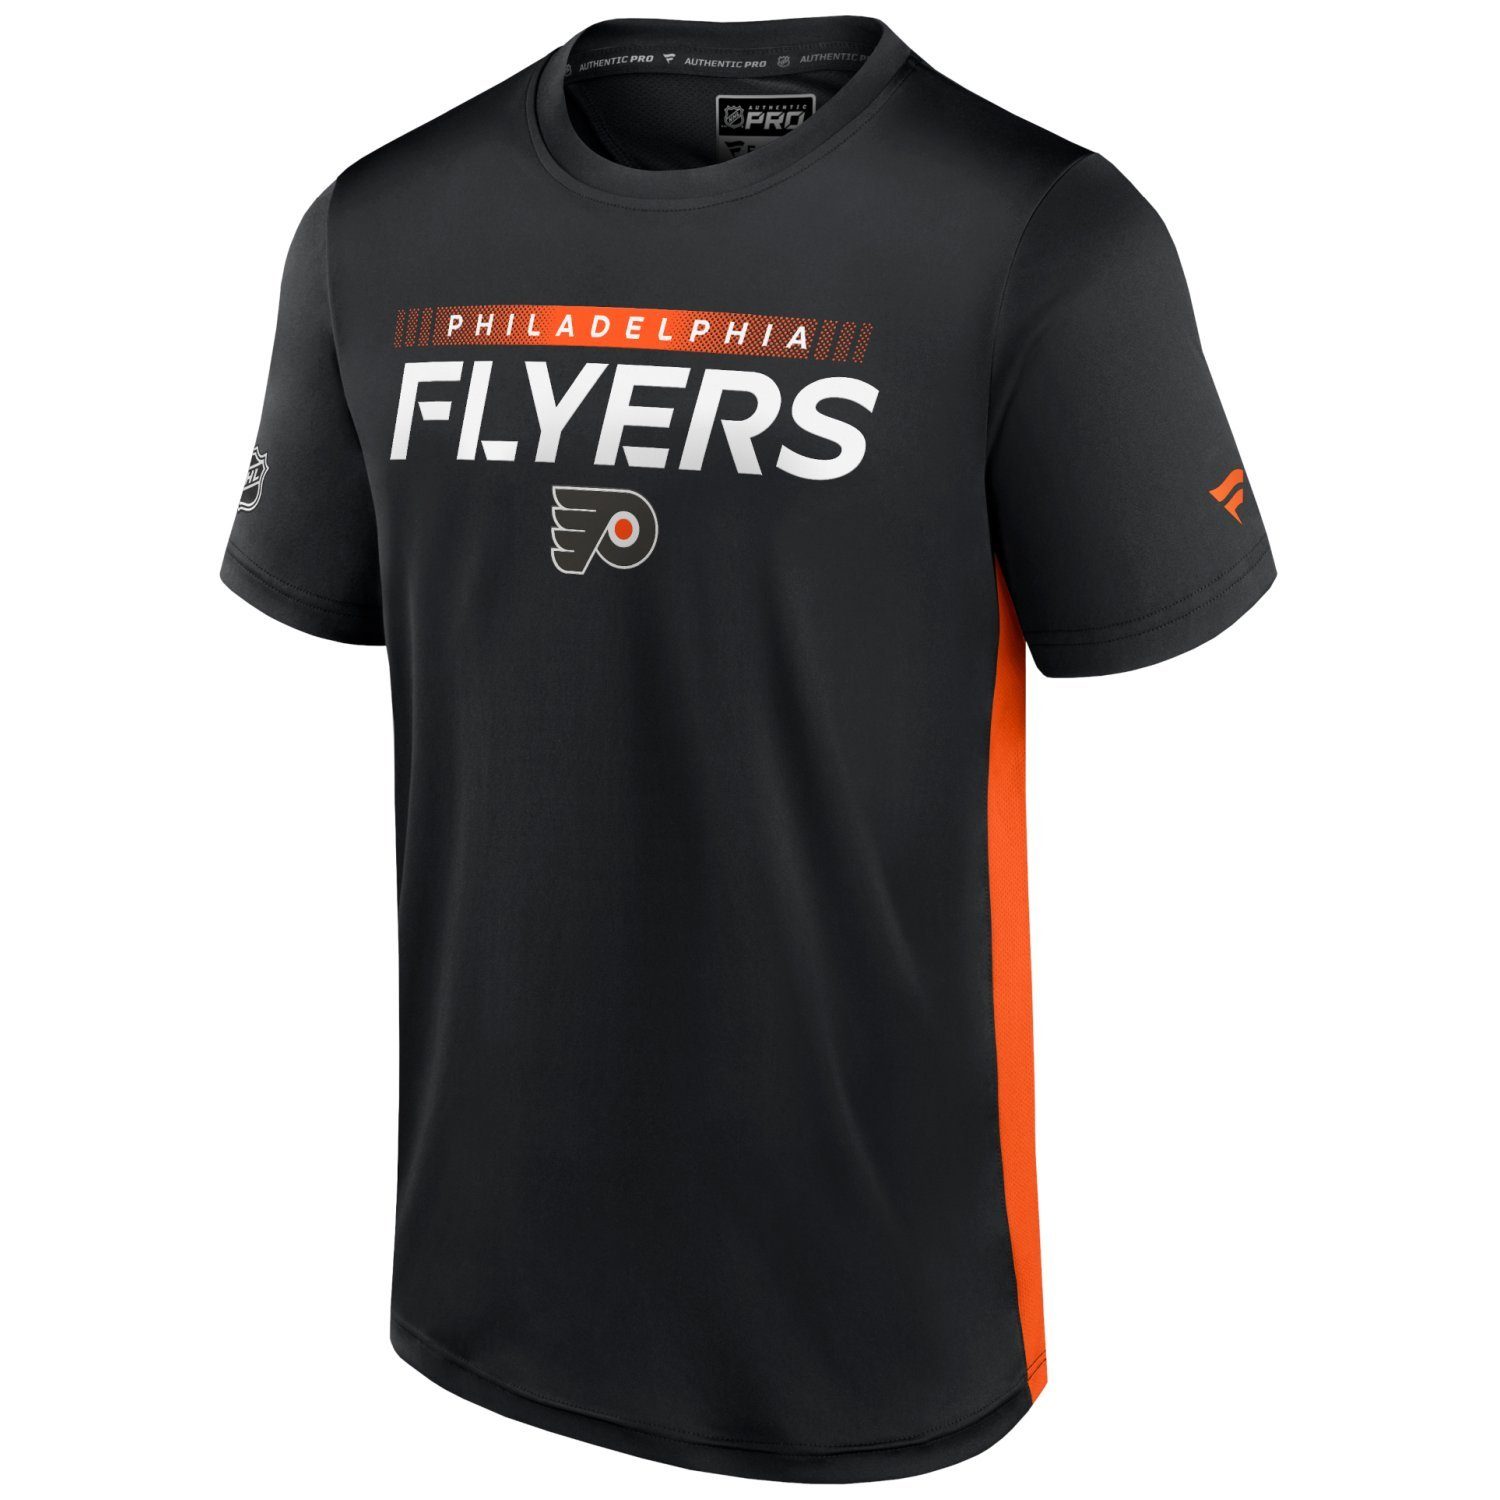 Flyers Philadelphia Fanatics Pro Authentic Print-Shirt RINK Performance